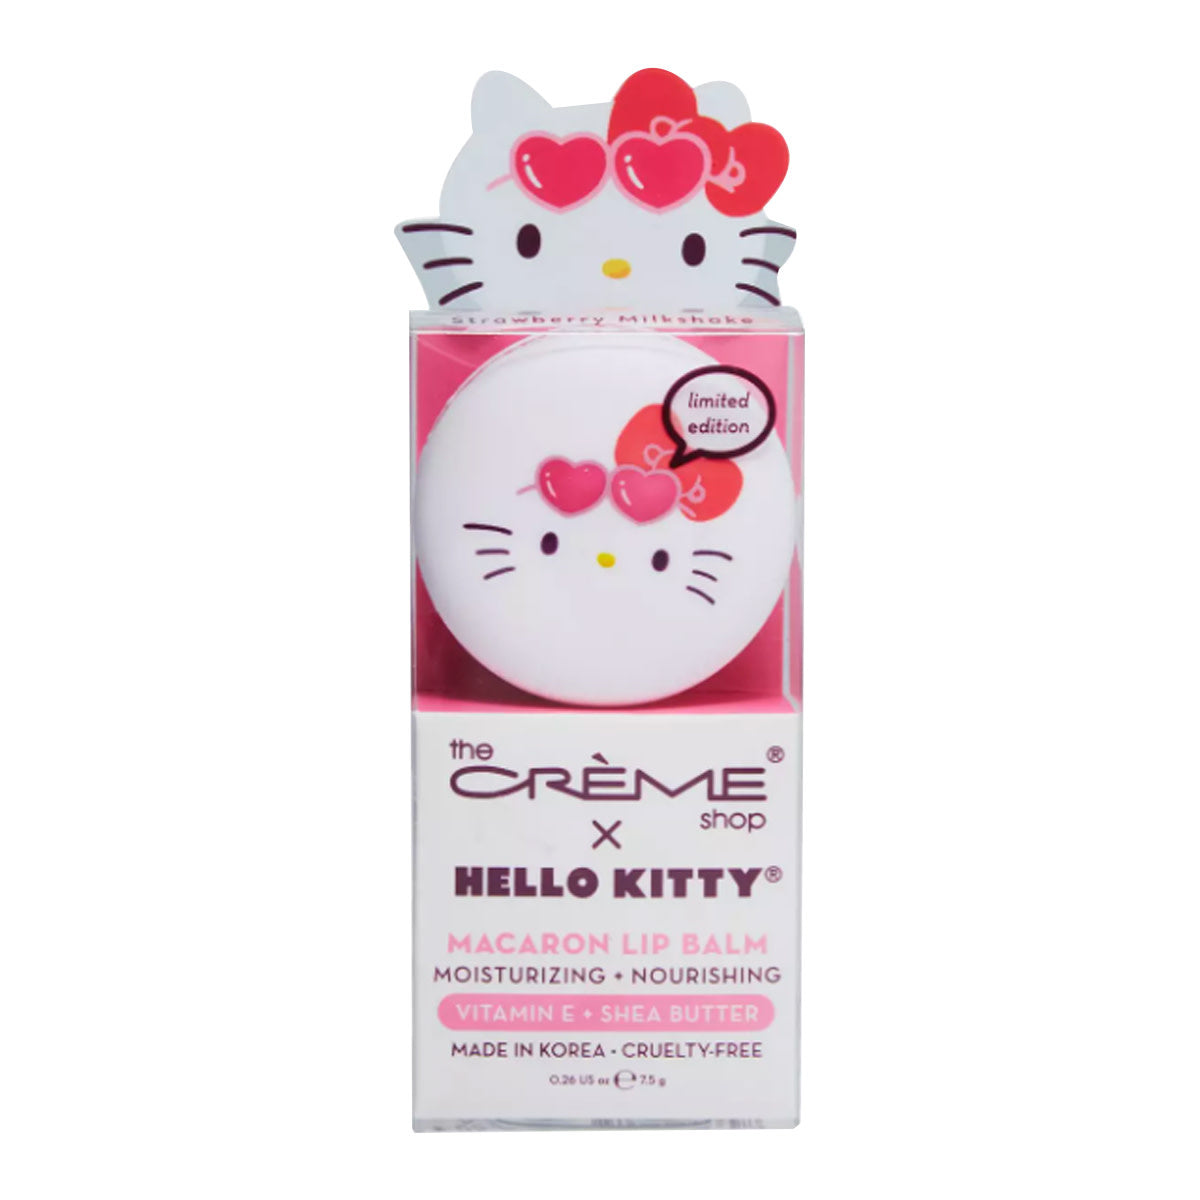 The Creme Shop Hello Kitty Strawberry Milkshake Macaron Lip Balm